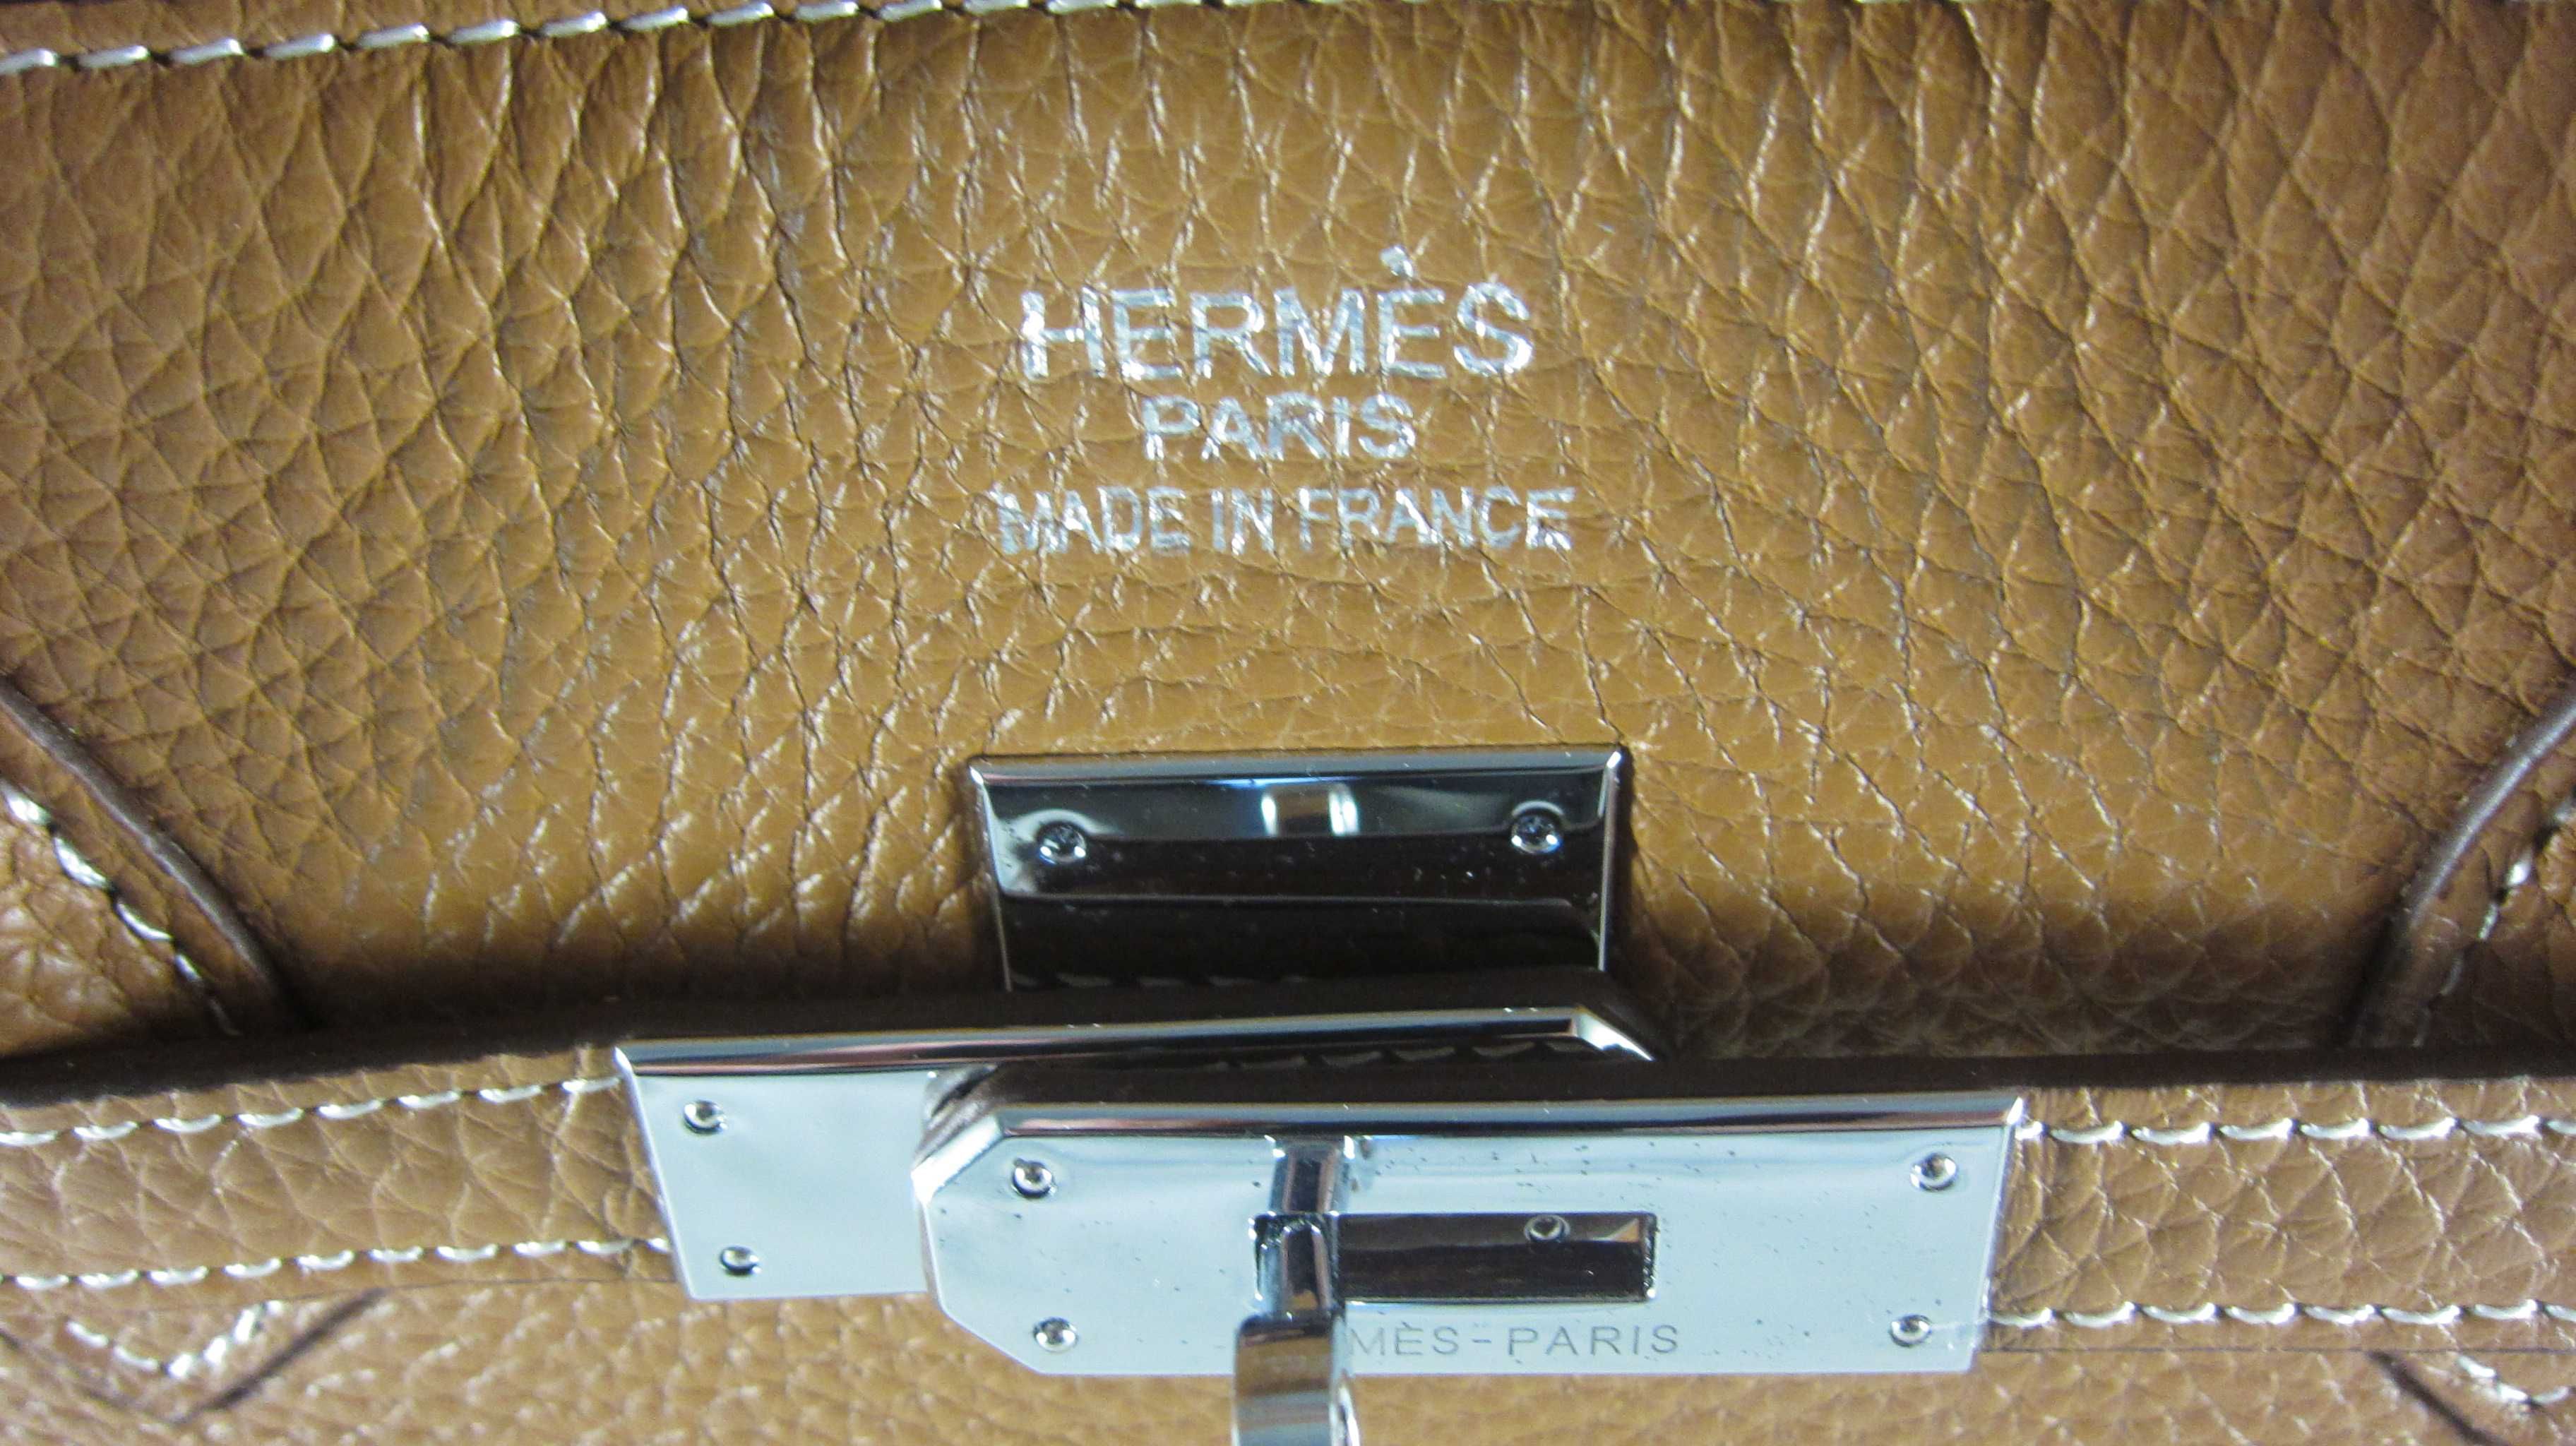 Mala Hermès Paris *NUNCA USADA